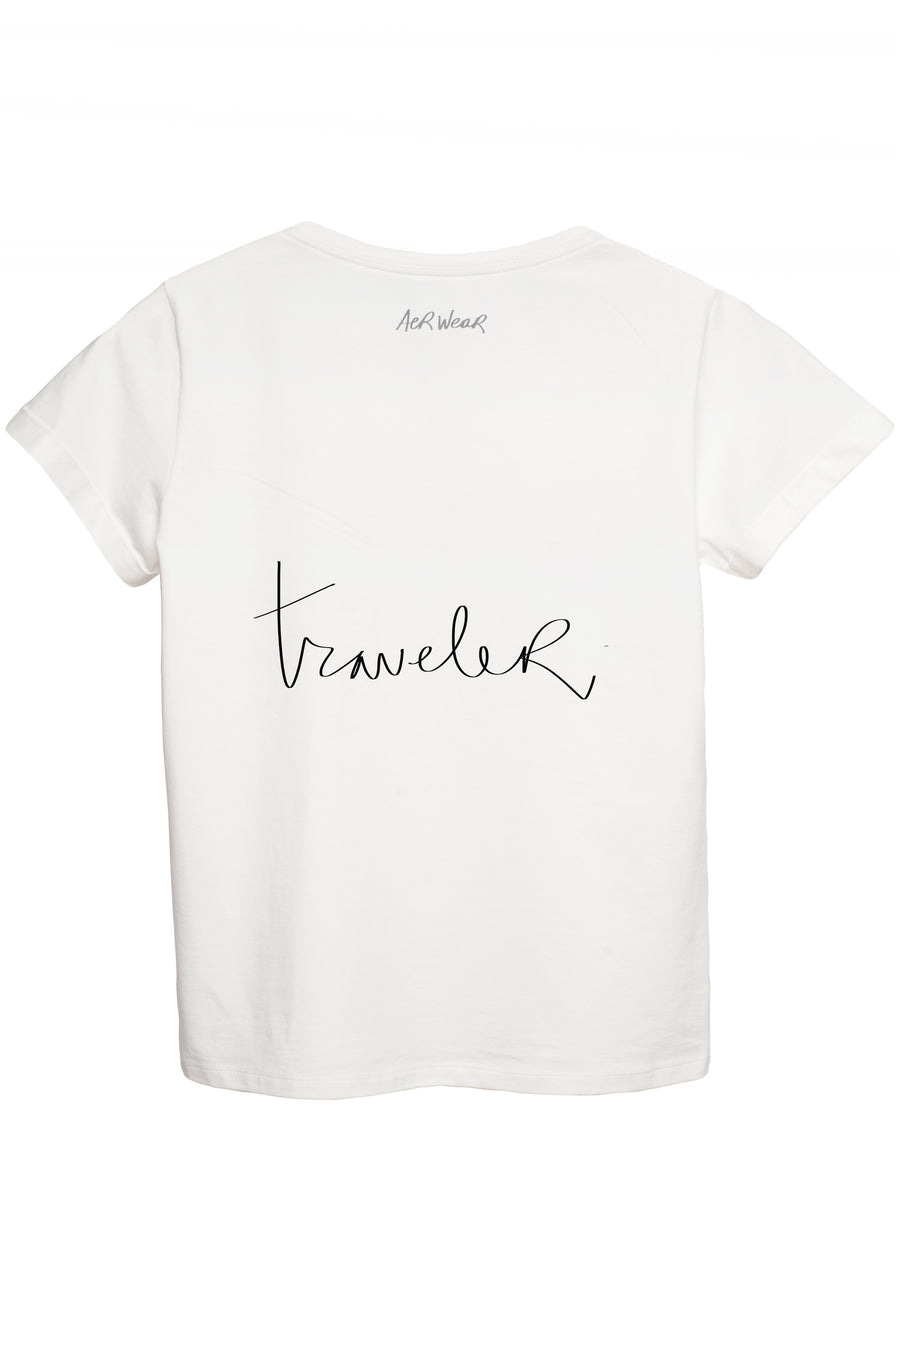 TRAVELER Tshirt